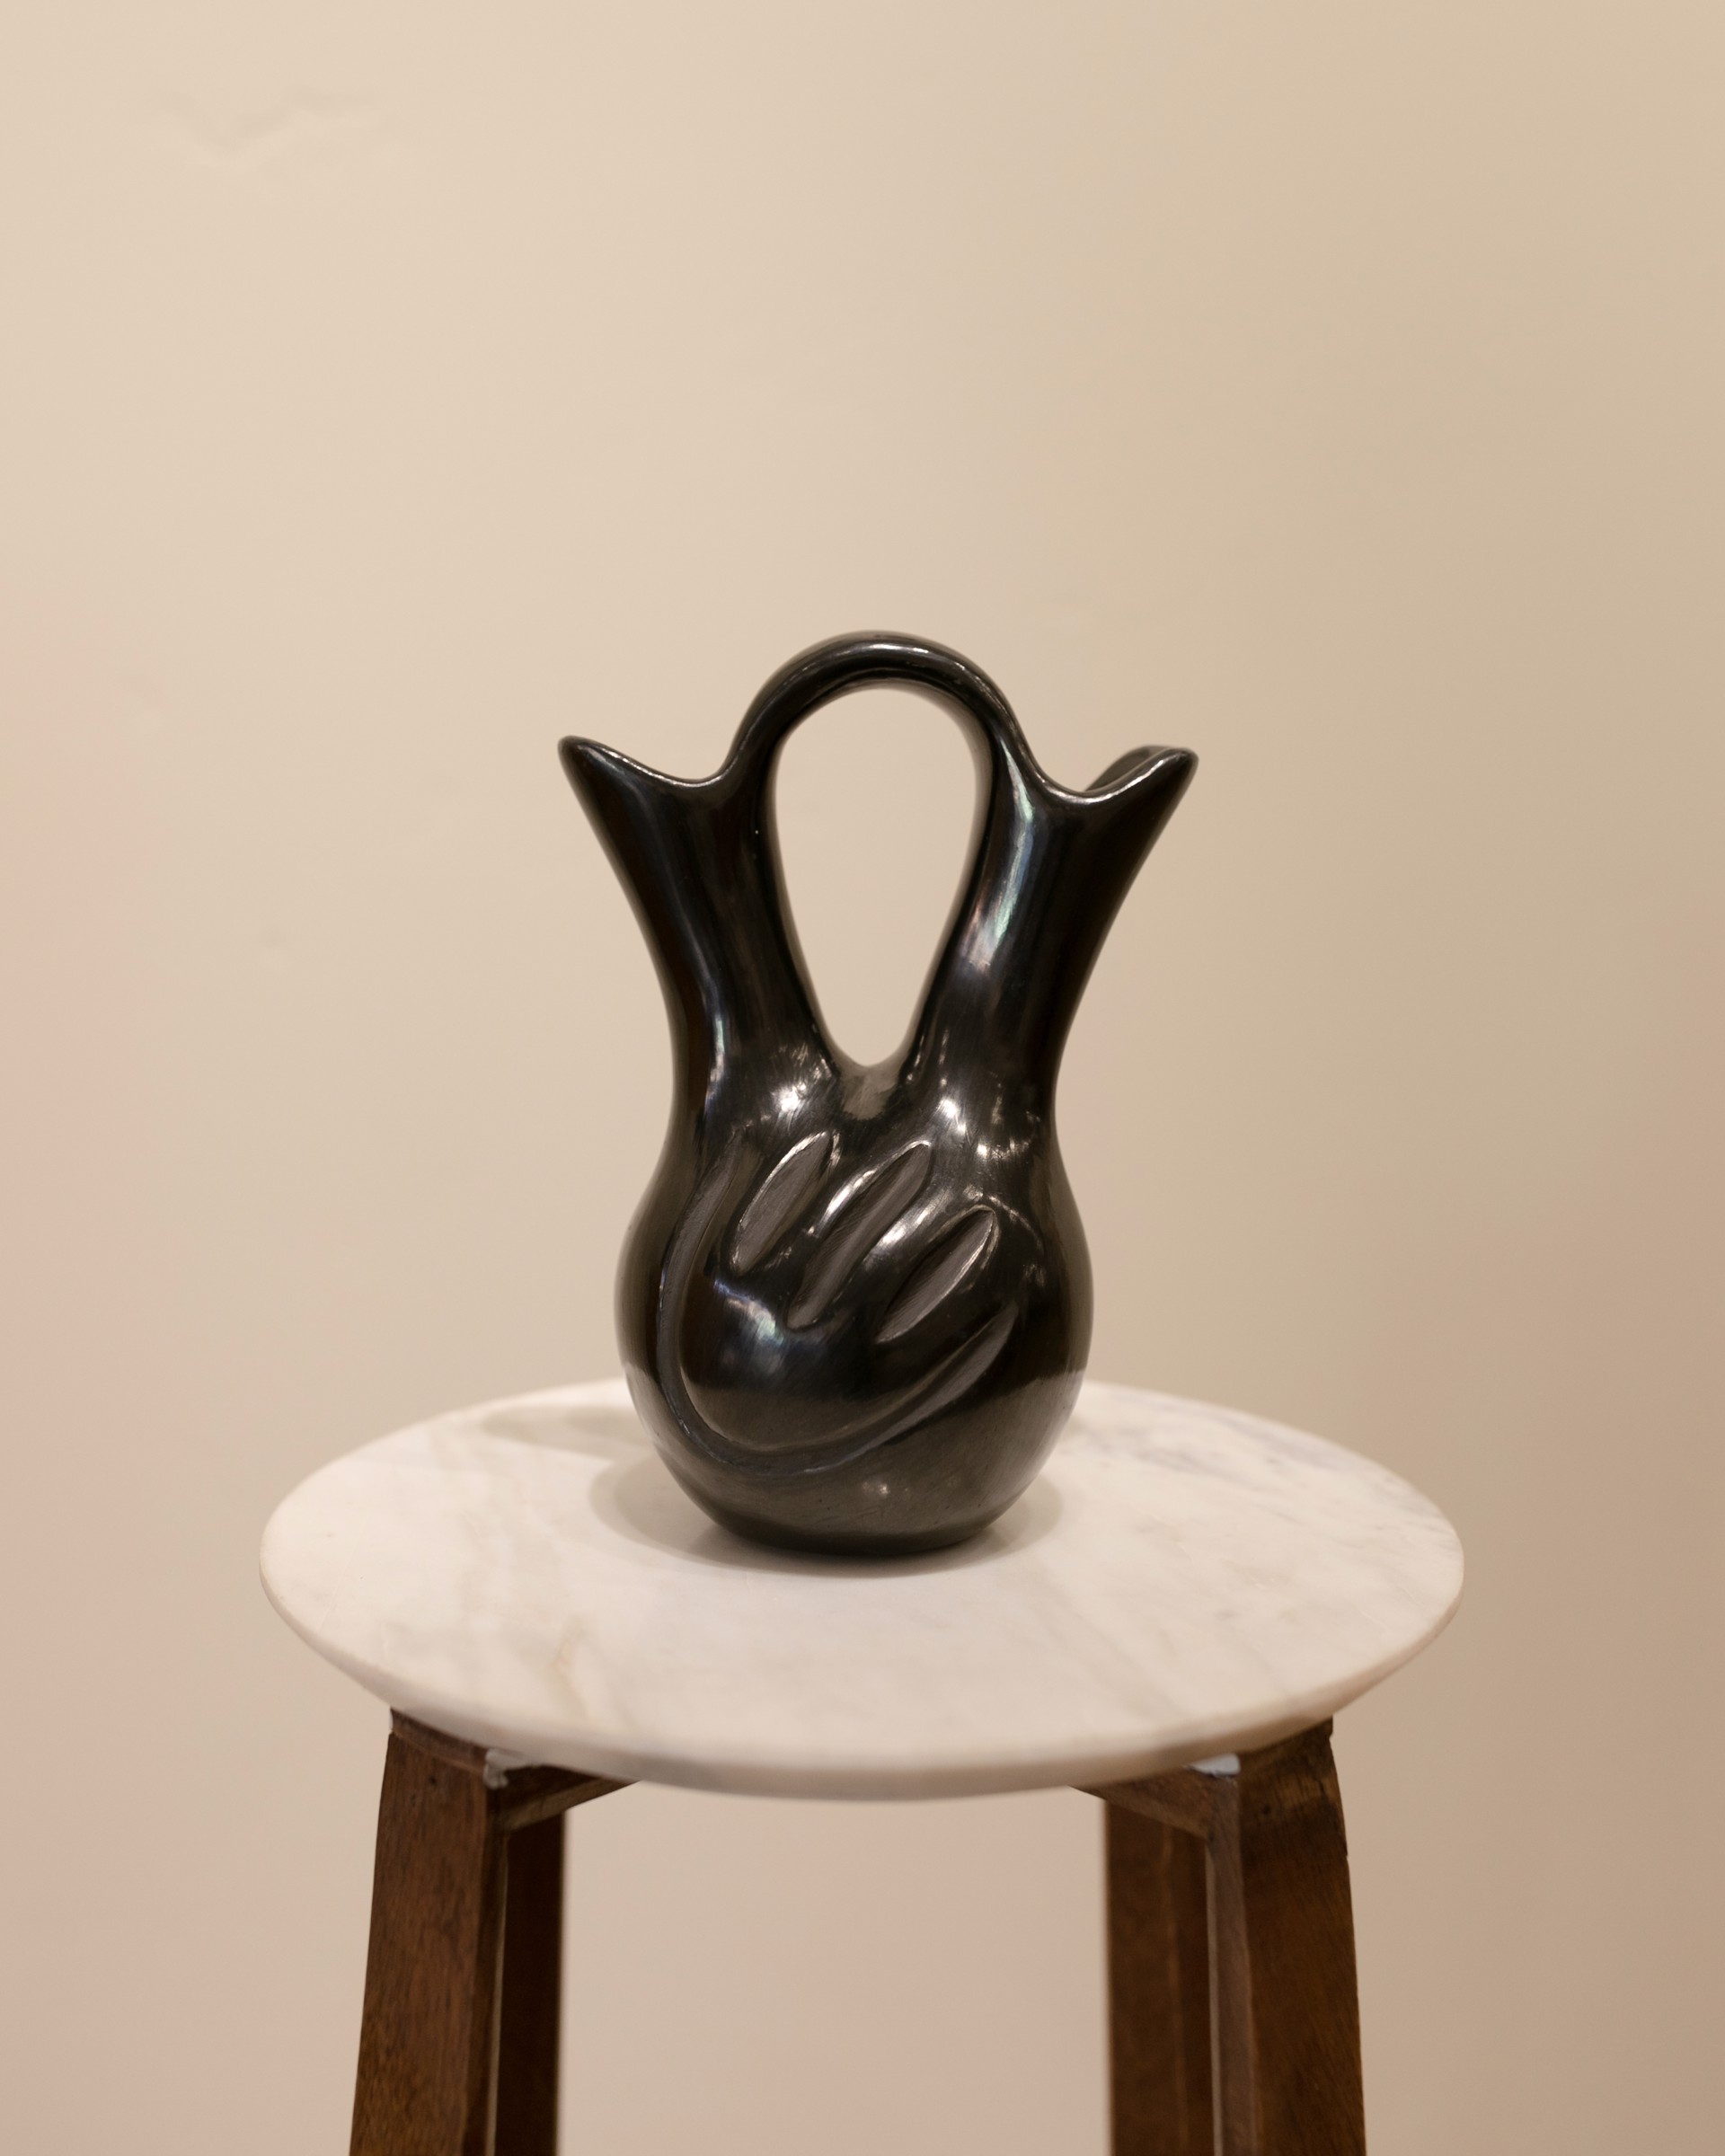 Bearclaw Wedding Vase with handle #8 by Richard Hendricks